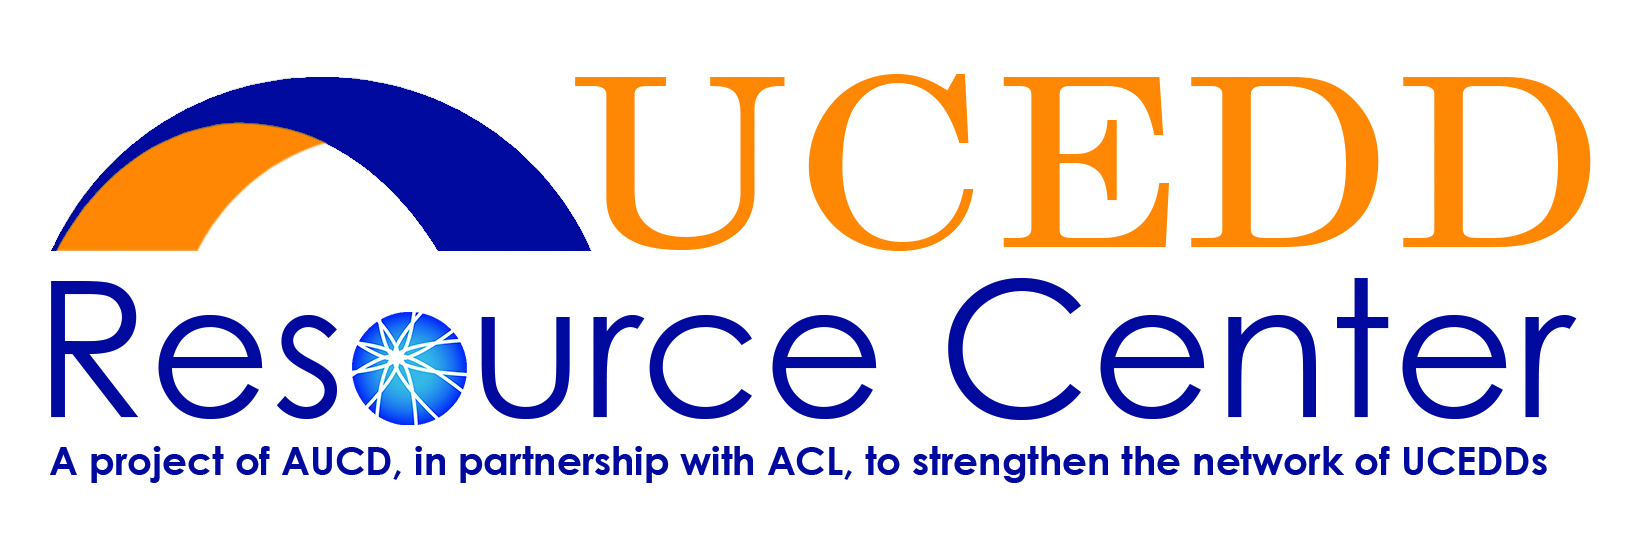 UCEDD Resource Center logo